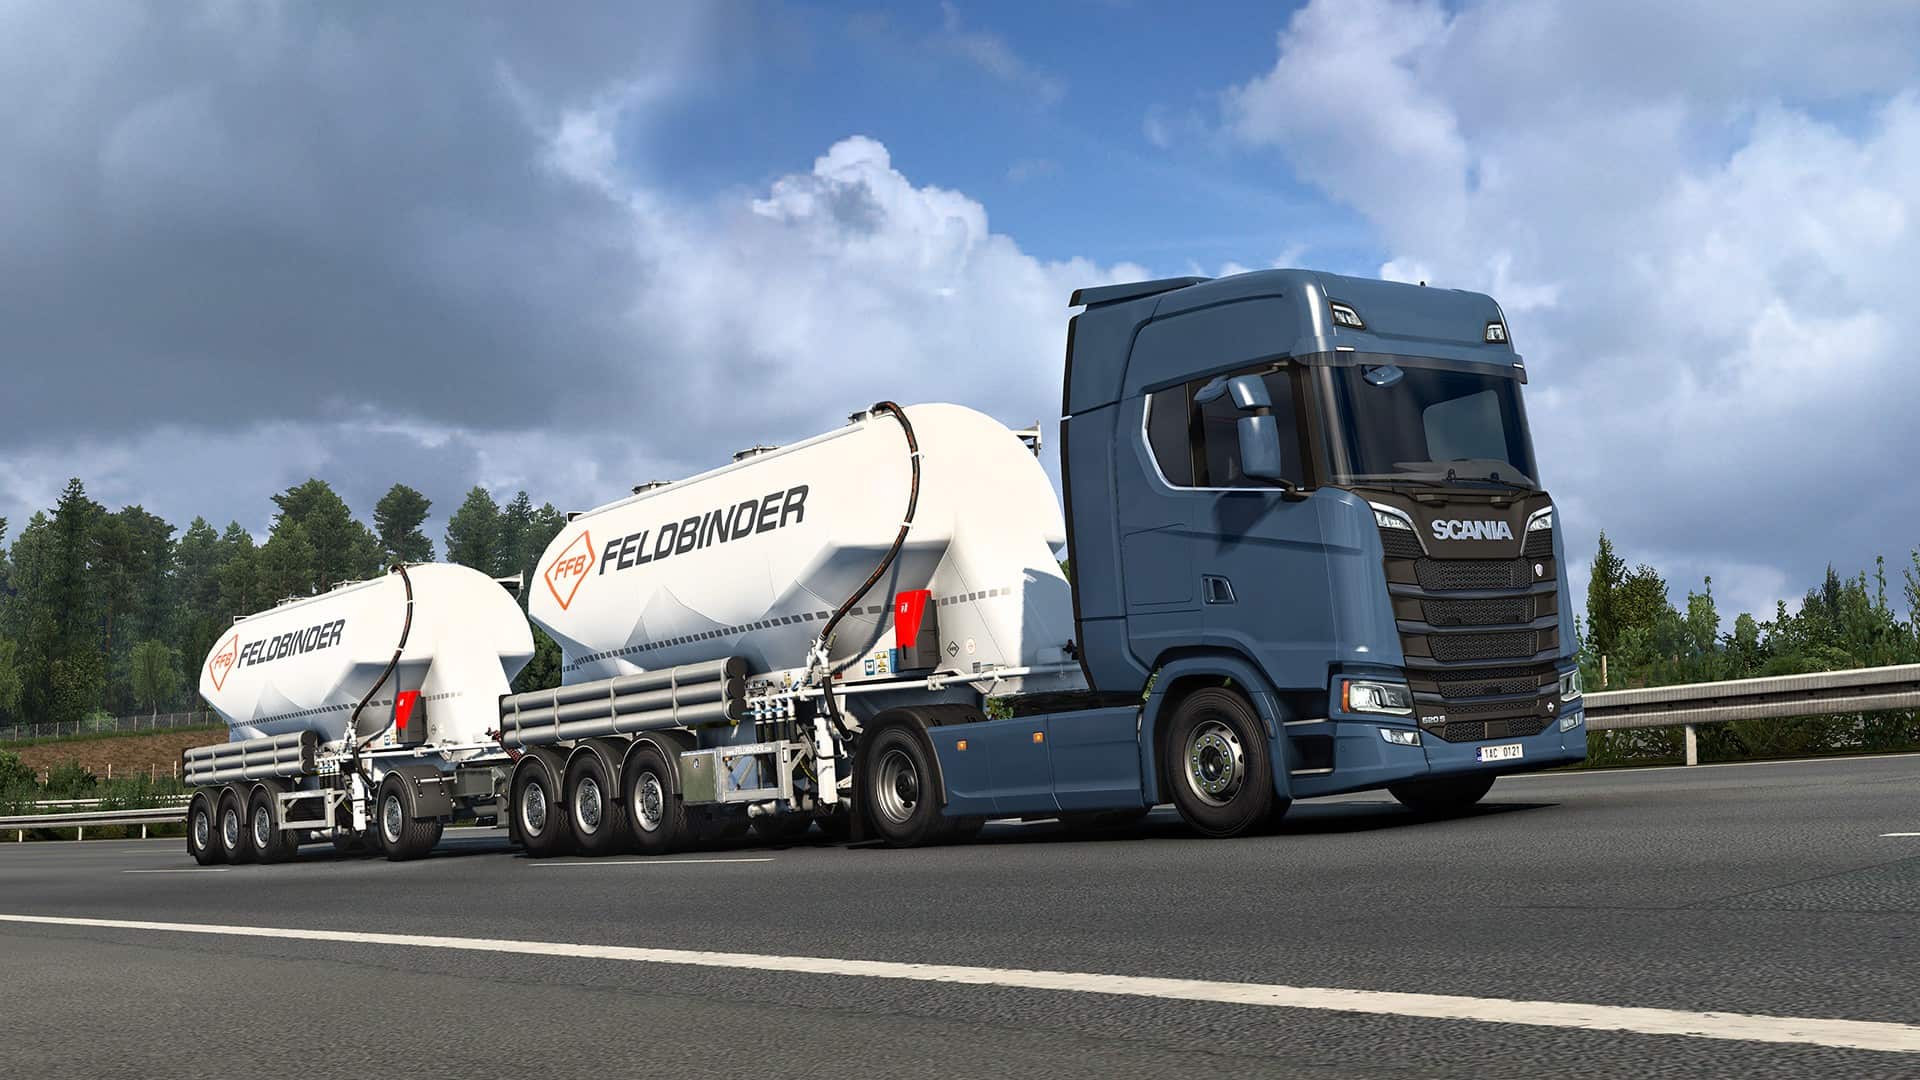 http://traxion.gg/wp-content/uploads/2022/12/Euro-Truck-Simulator-2-introduces-Feldbinder-Trailer-Pack-DLC.jpg